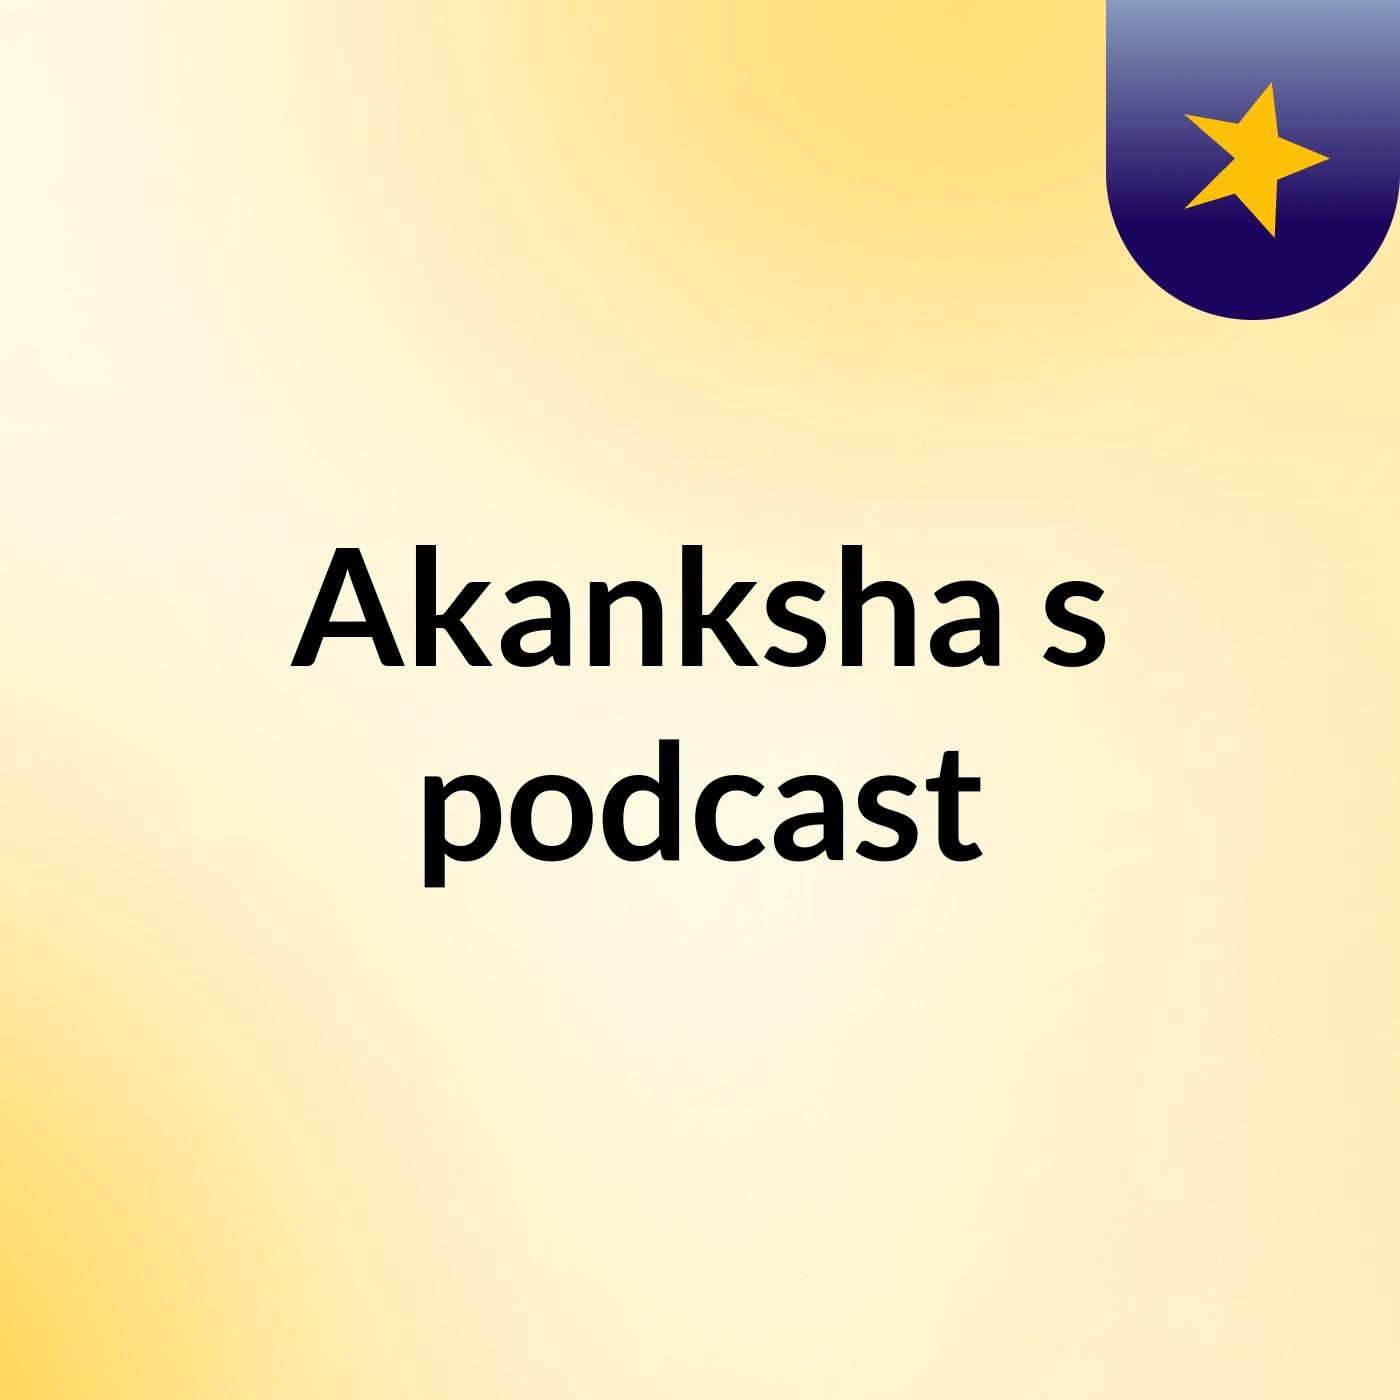 Episode 3 - Akanksha's podcast